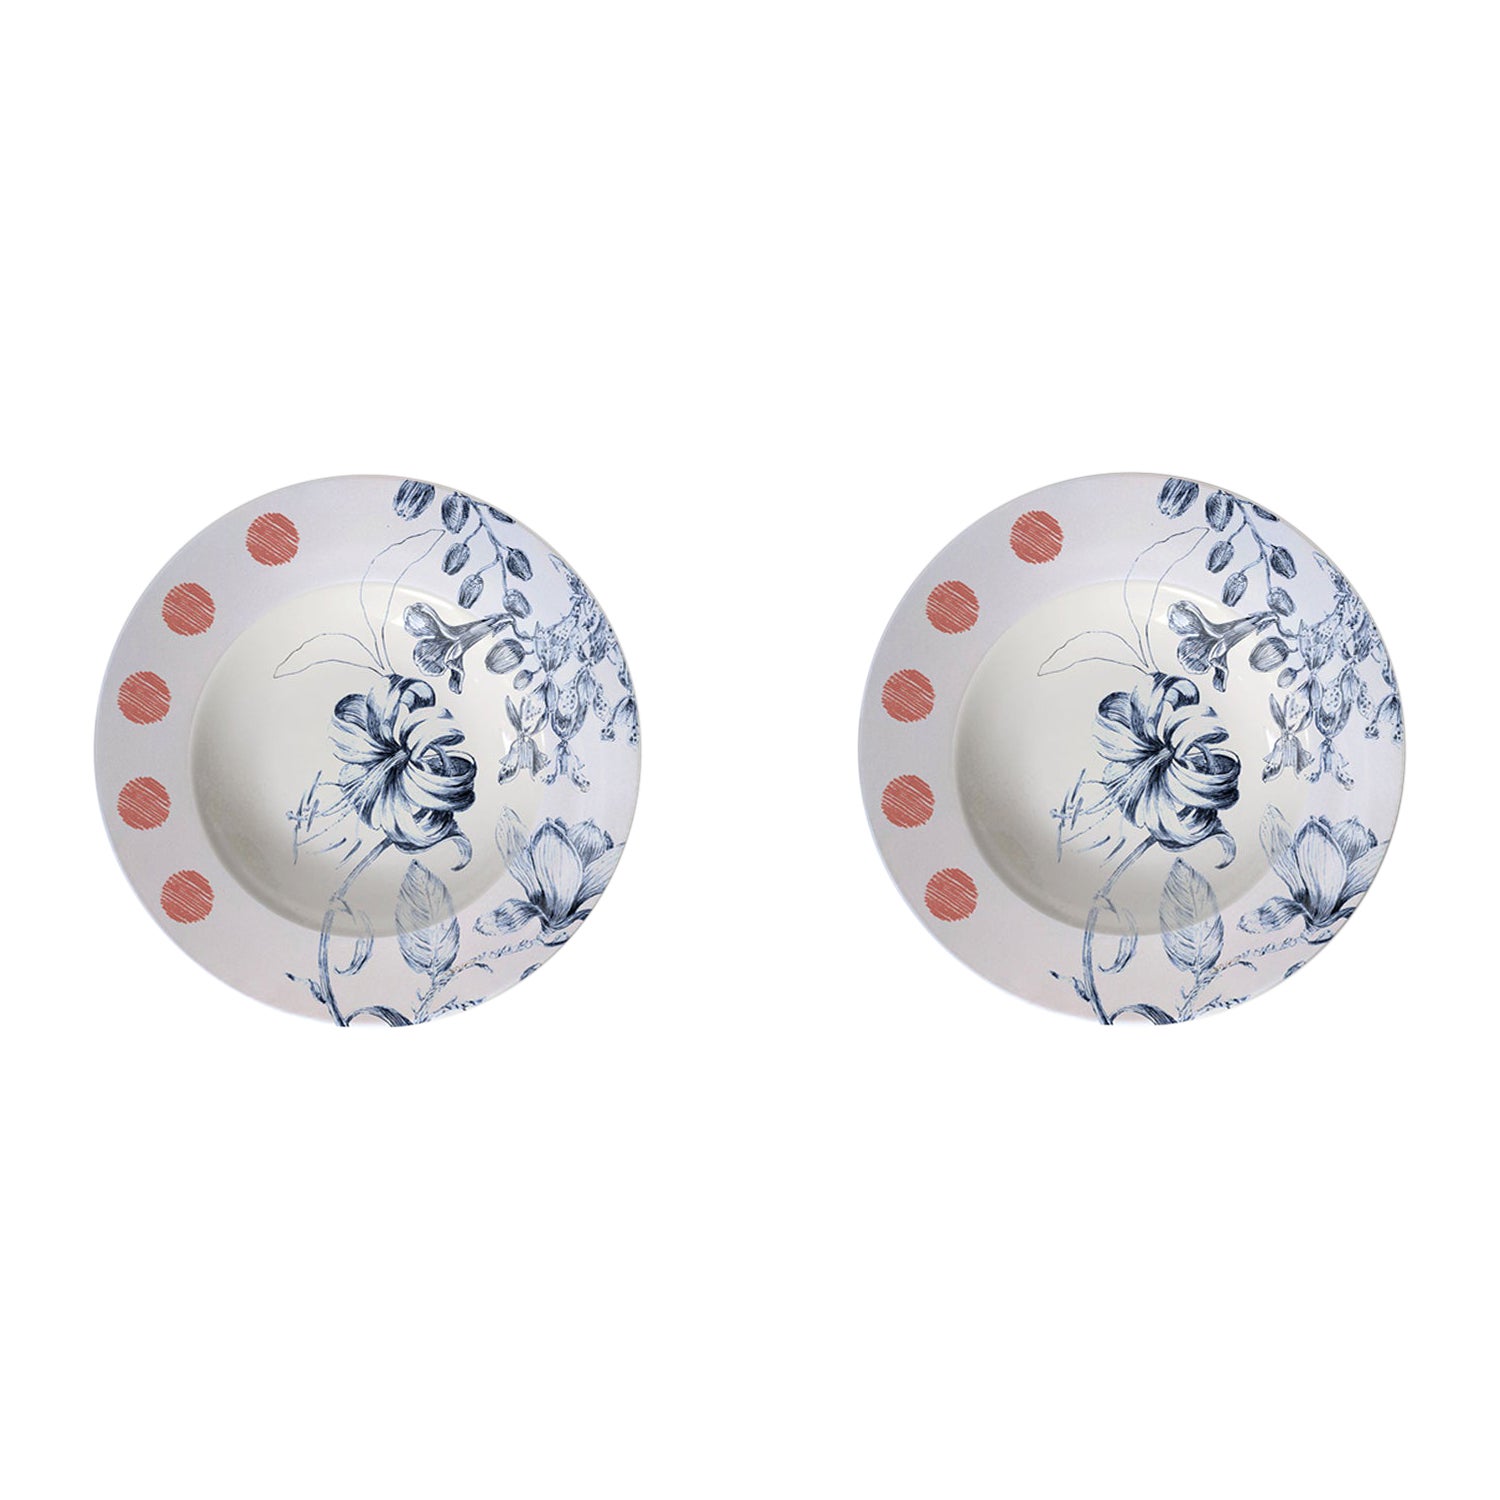 Marie Antoinette, Contemporary Porcelain Pasta Plates Set with Floral Design For Sale